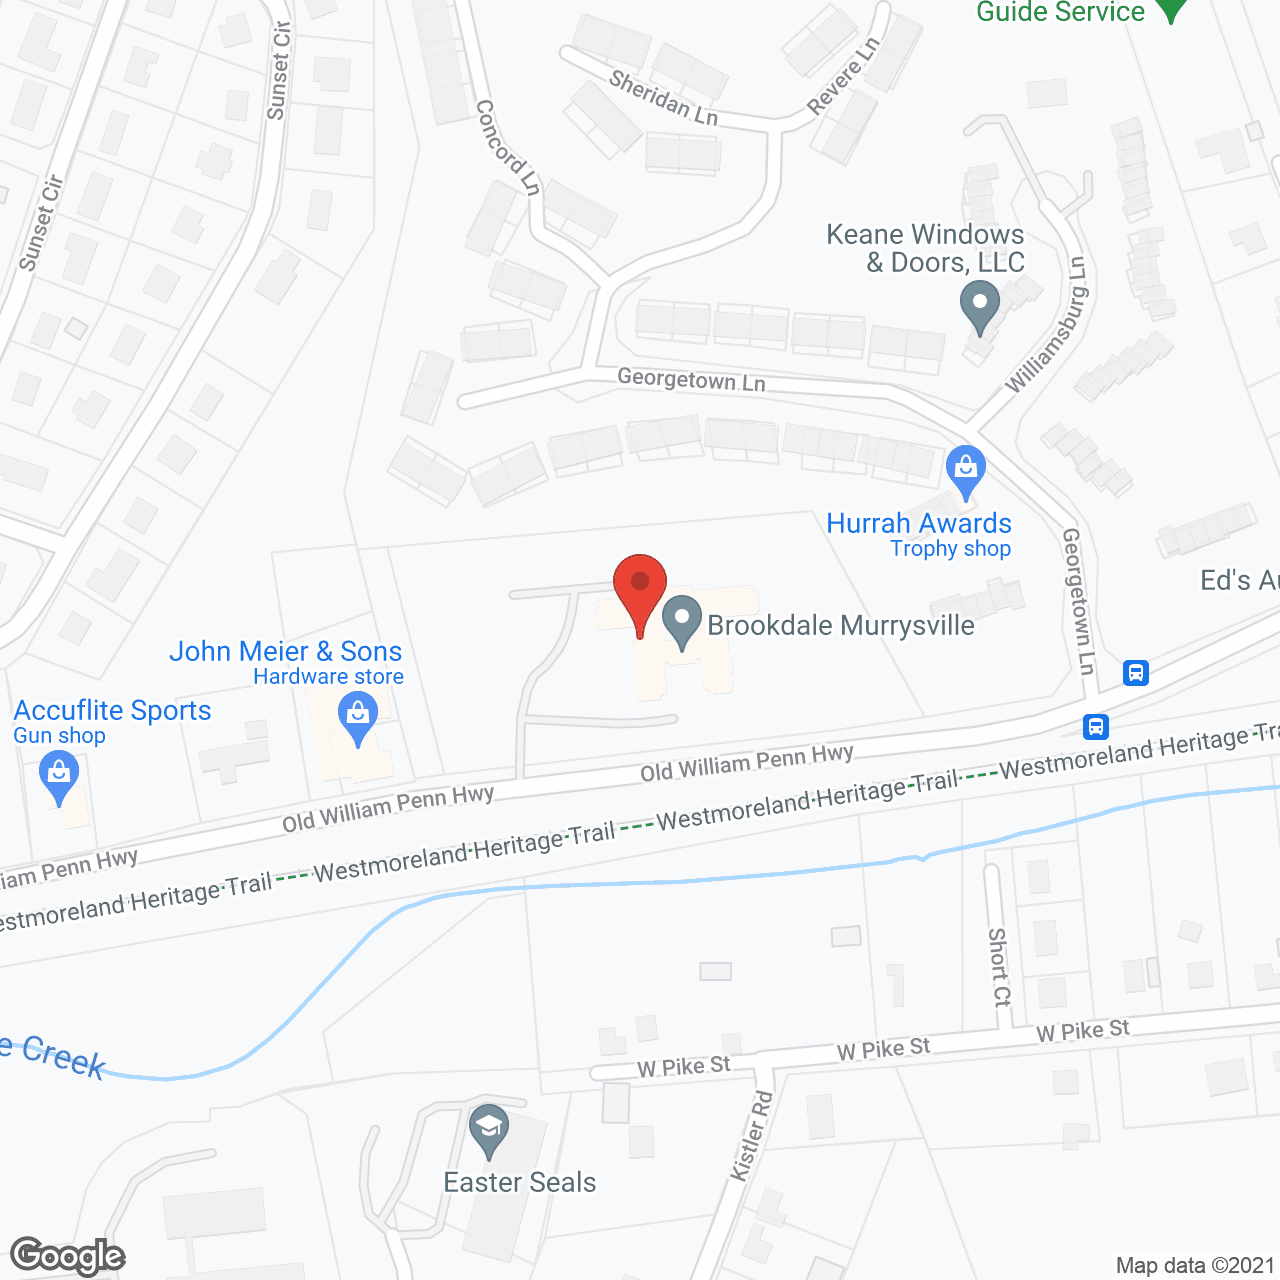 Brookdale Murrysville in google map